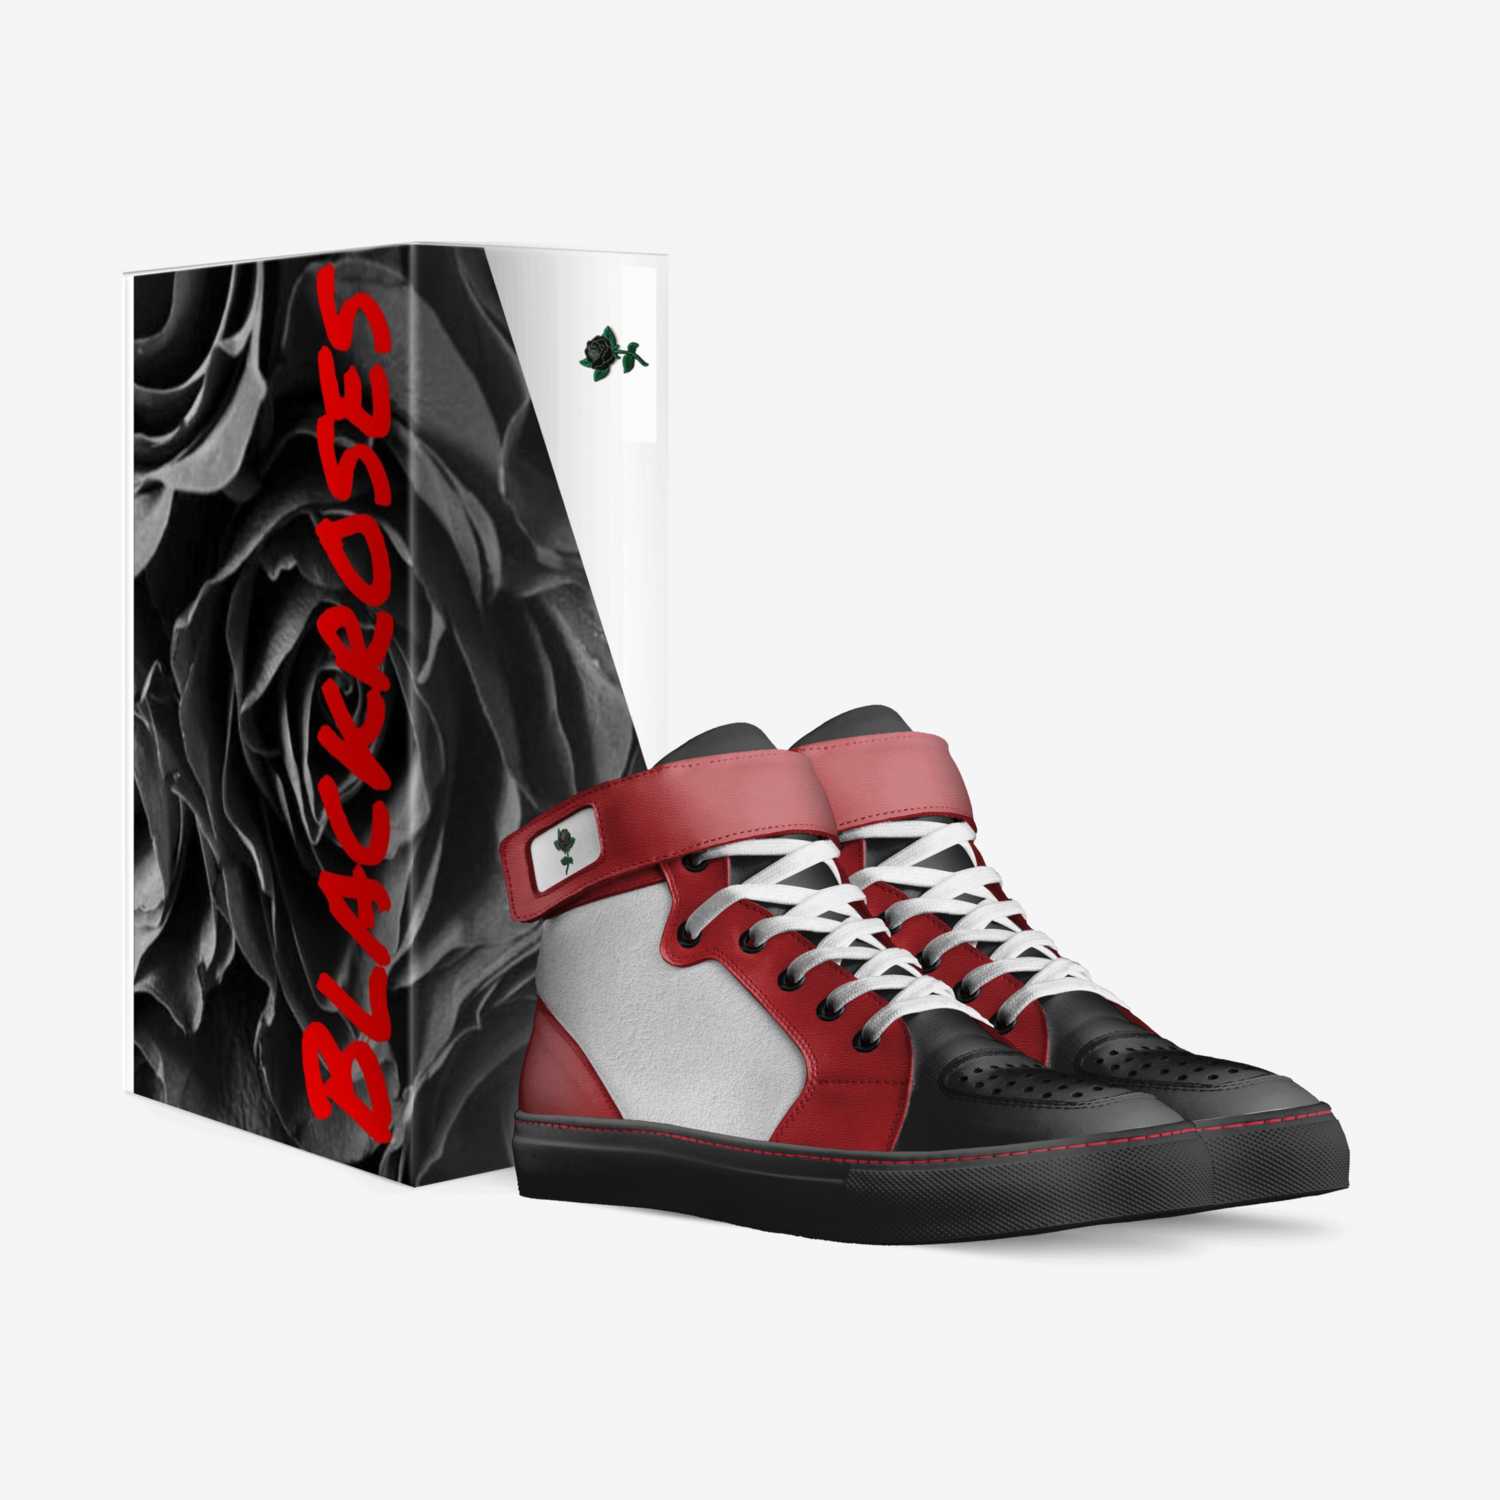 blackroses custom made in Italy shoes by Xavier Barnett | Box view